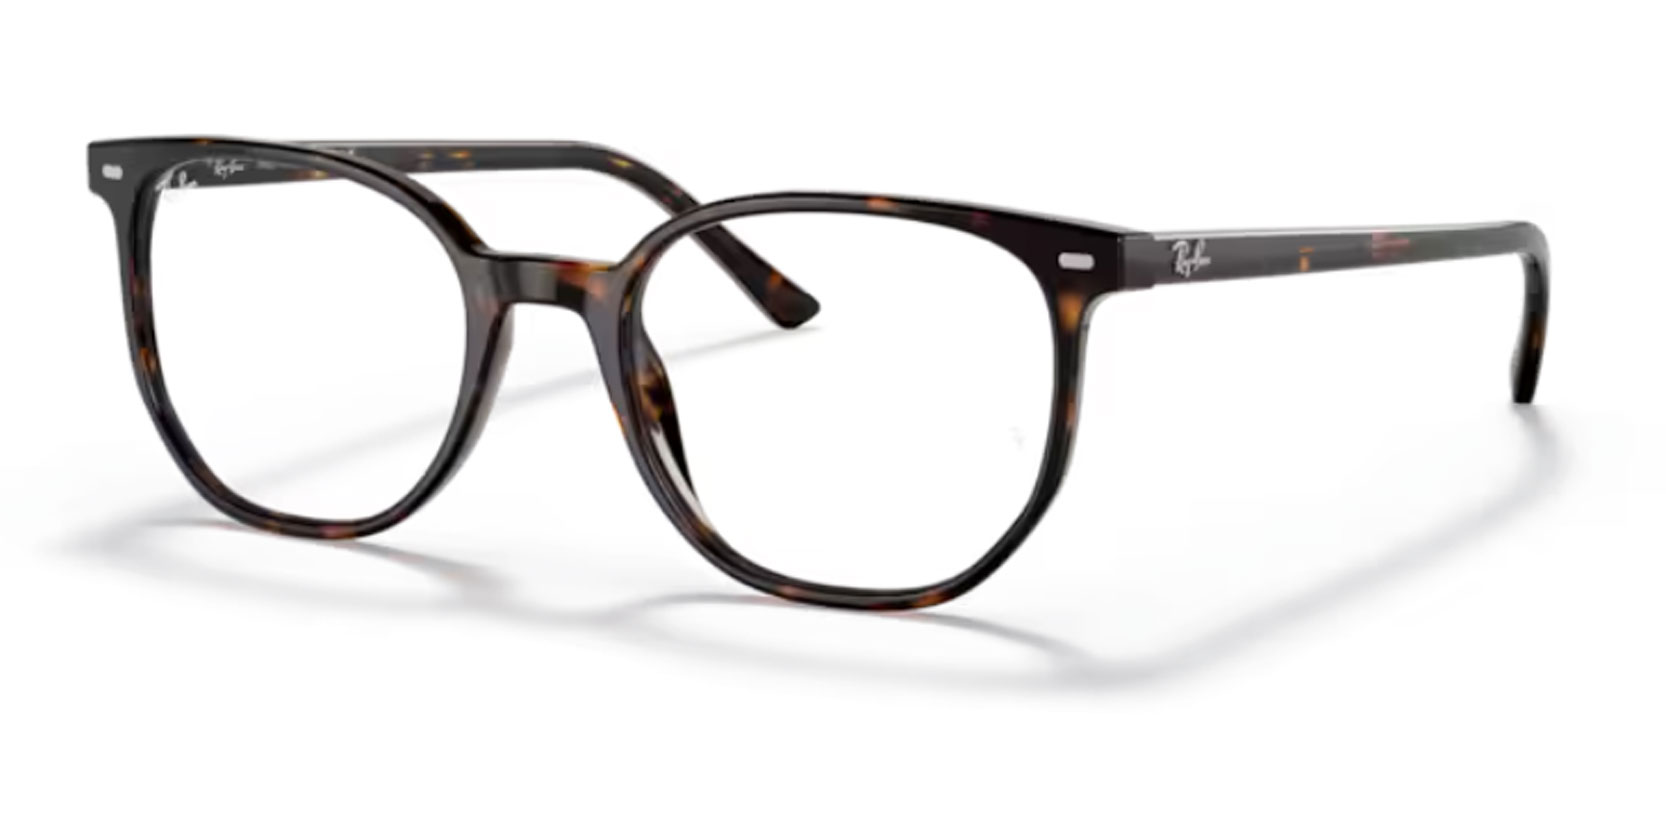 Ray-Ban briller - Elliot fra Ray-Ban - Grå - Acetate - oval - Medium